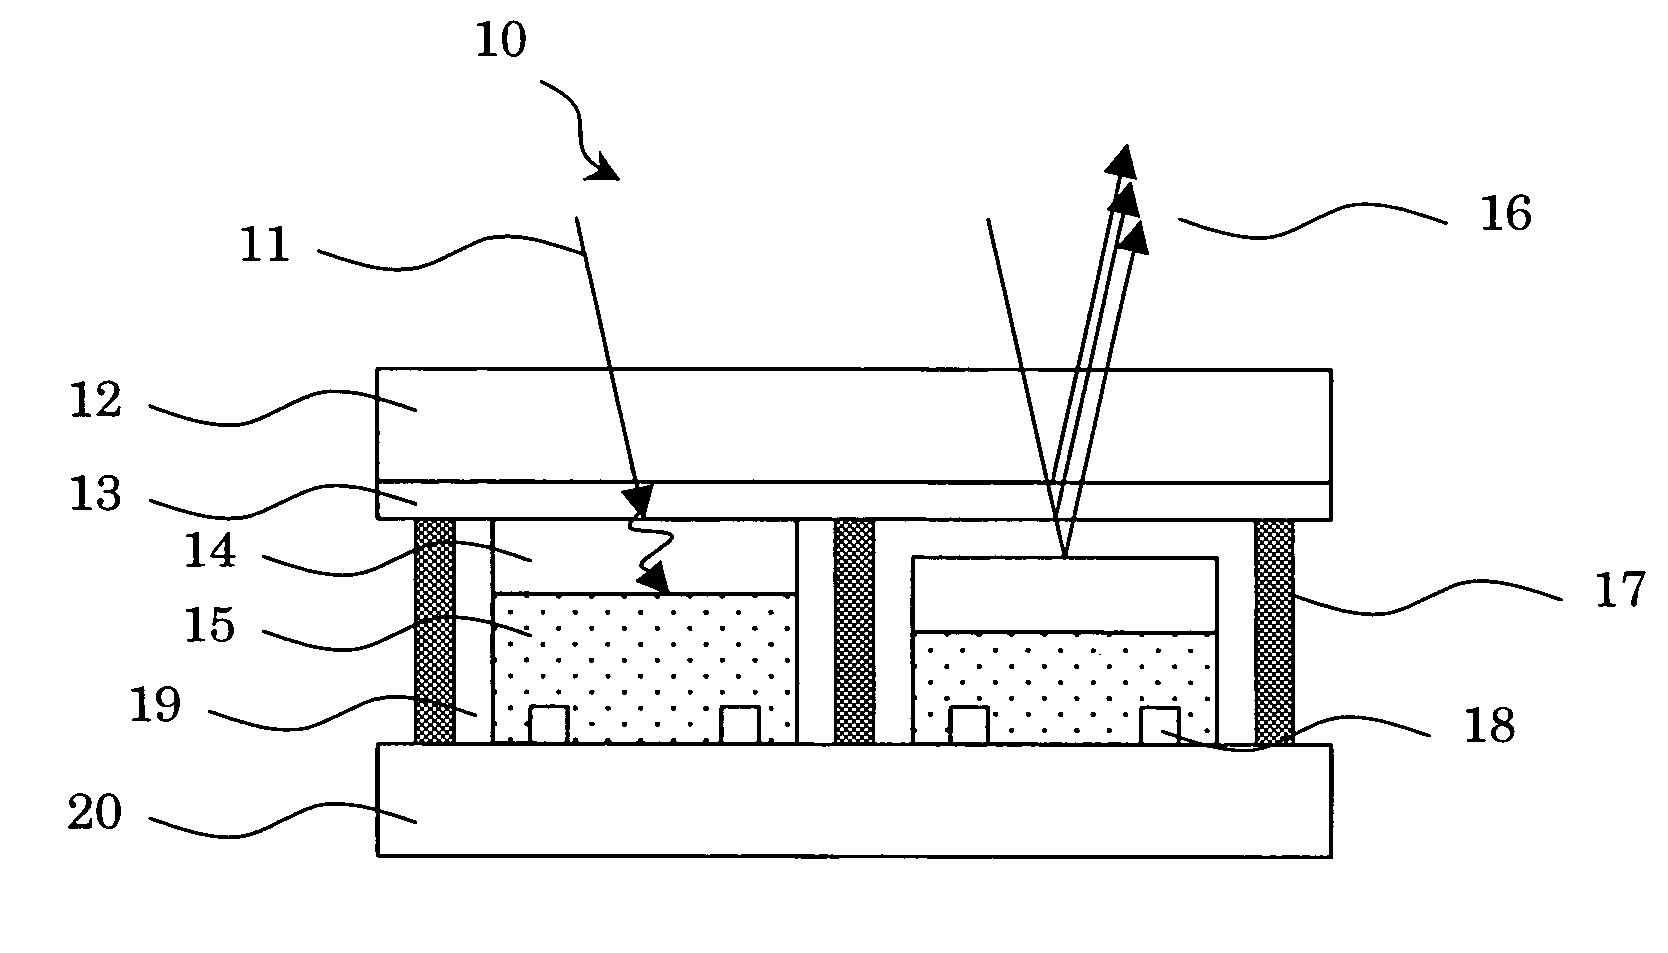 Interferometric modulator and display unit